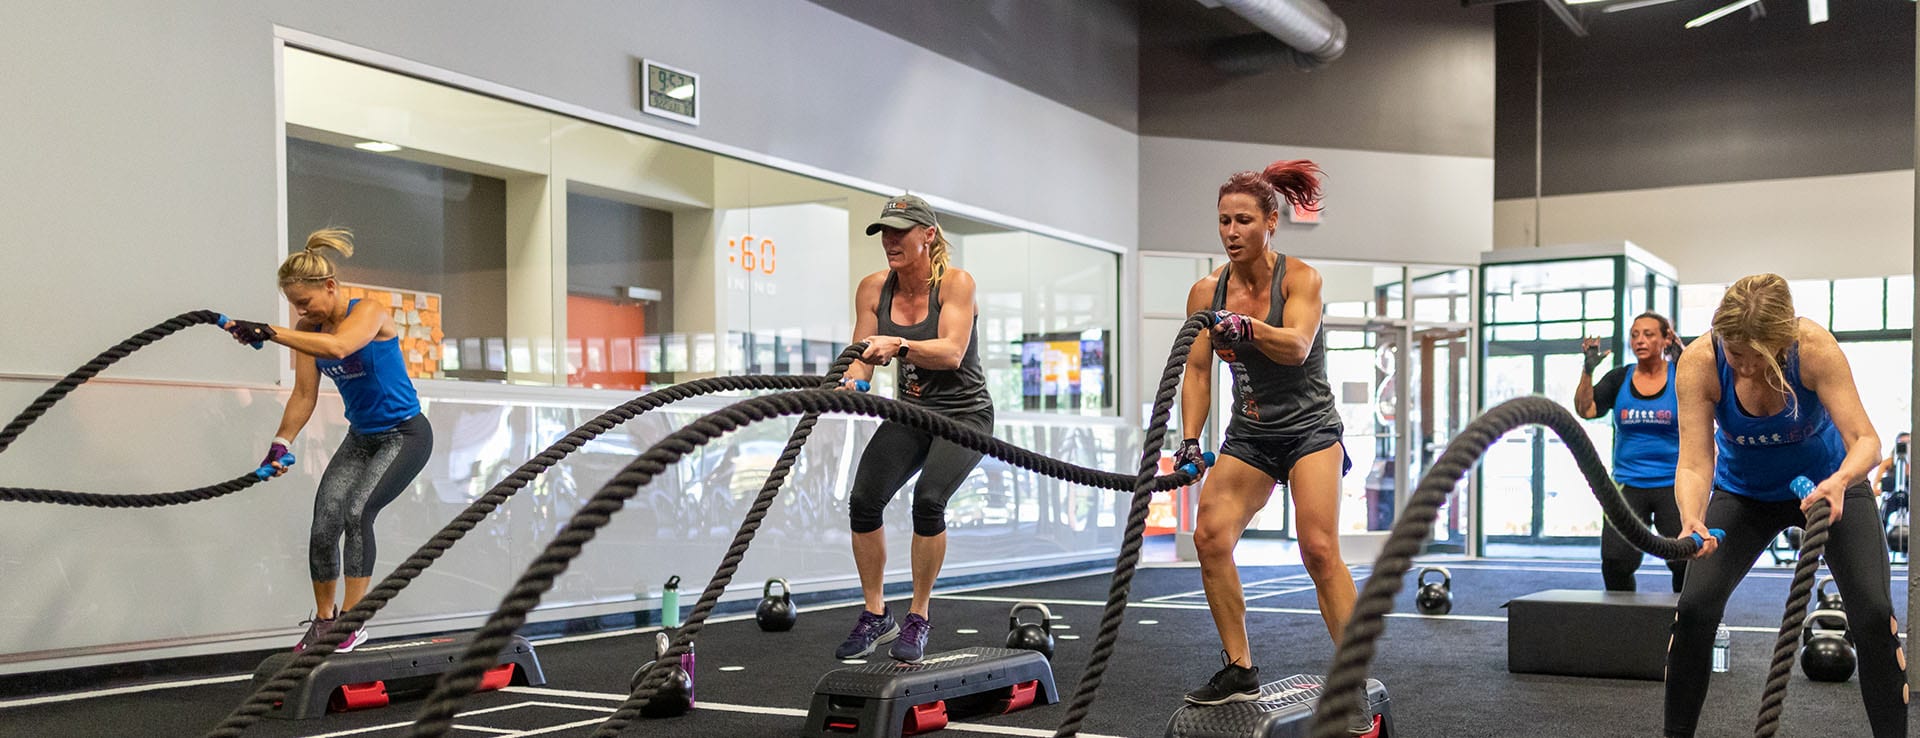 women using combat ropes in bfitt60 training